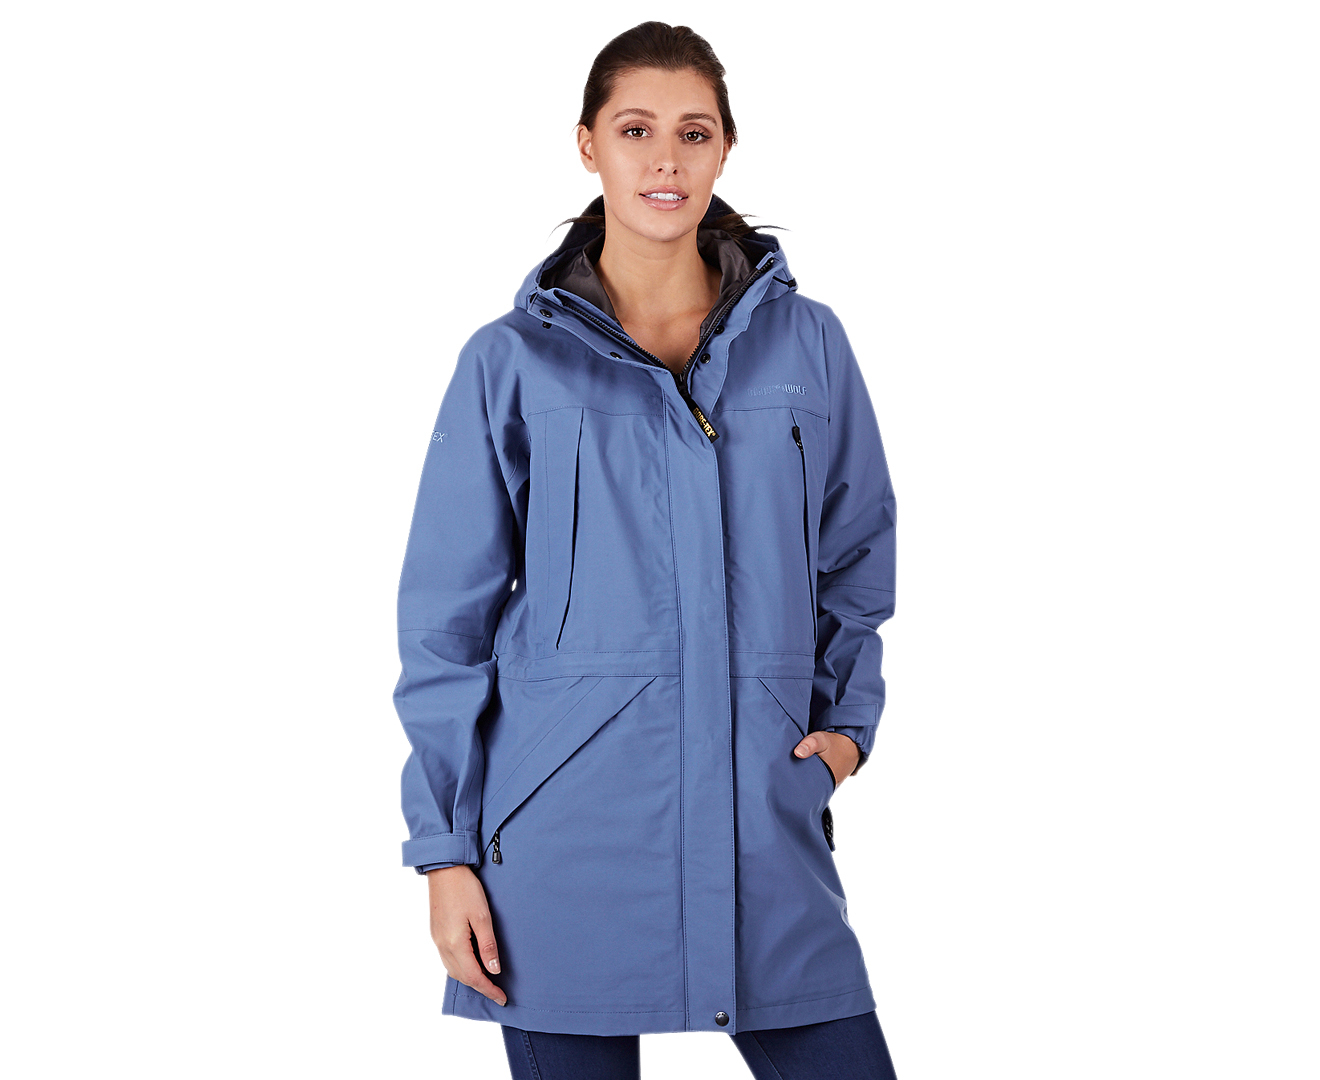 BlackWolf Women's Gore-Tex Amazon Jacket -Titanium Blue | Scoopon Shopping